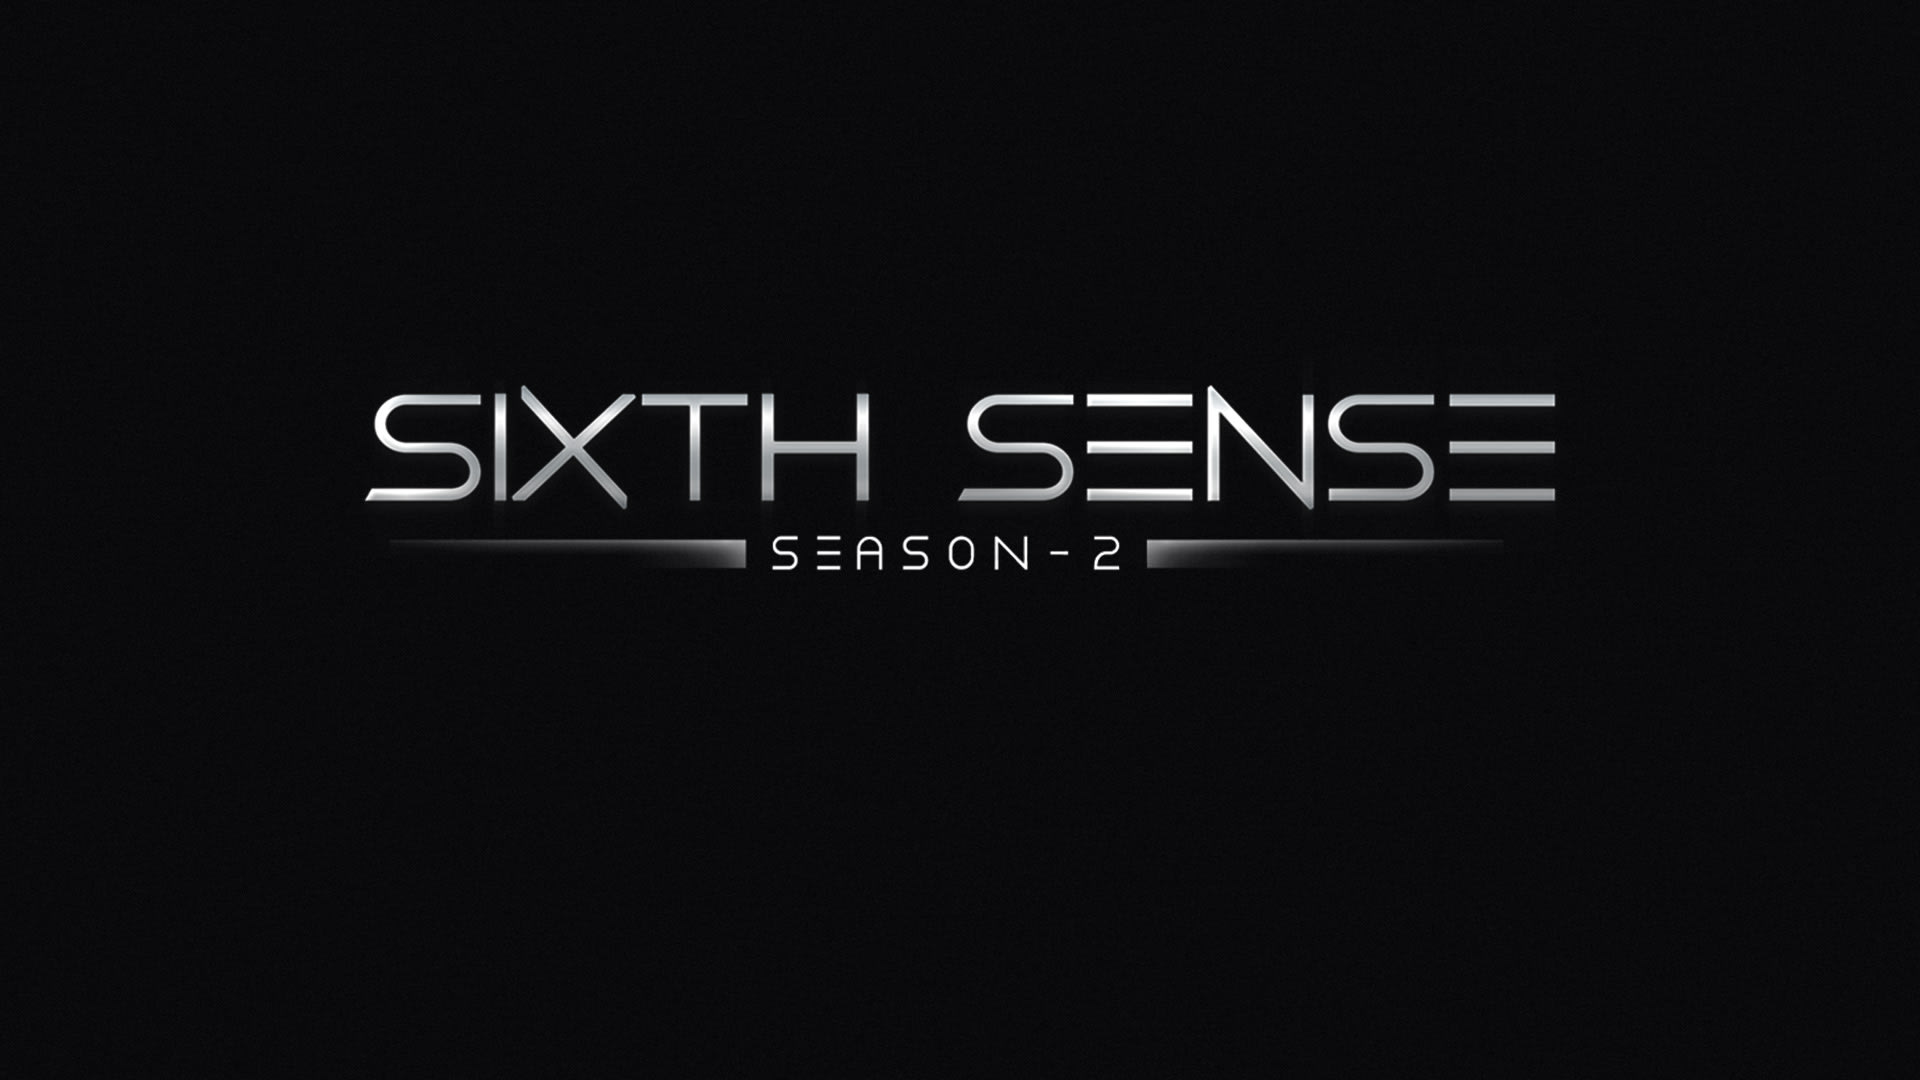 Sixth sense season 2 episode 13